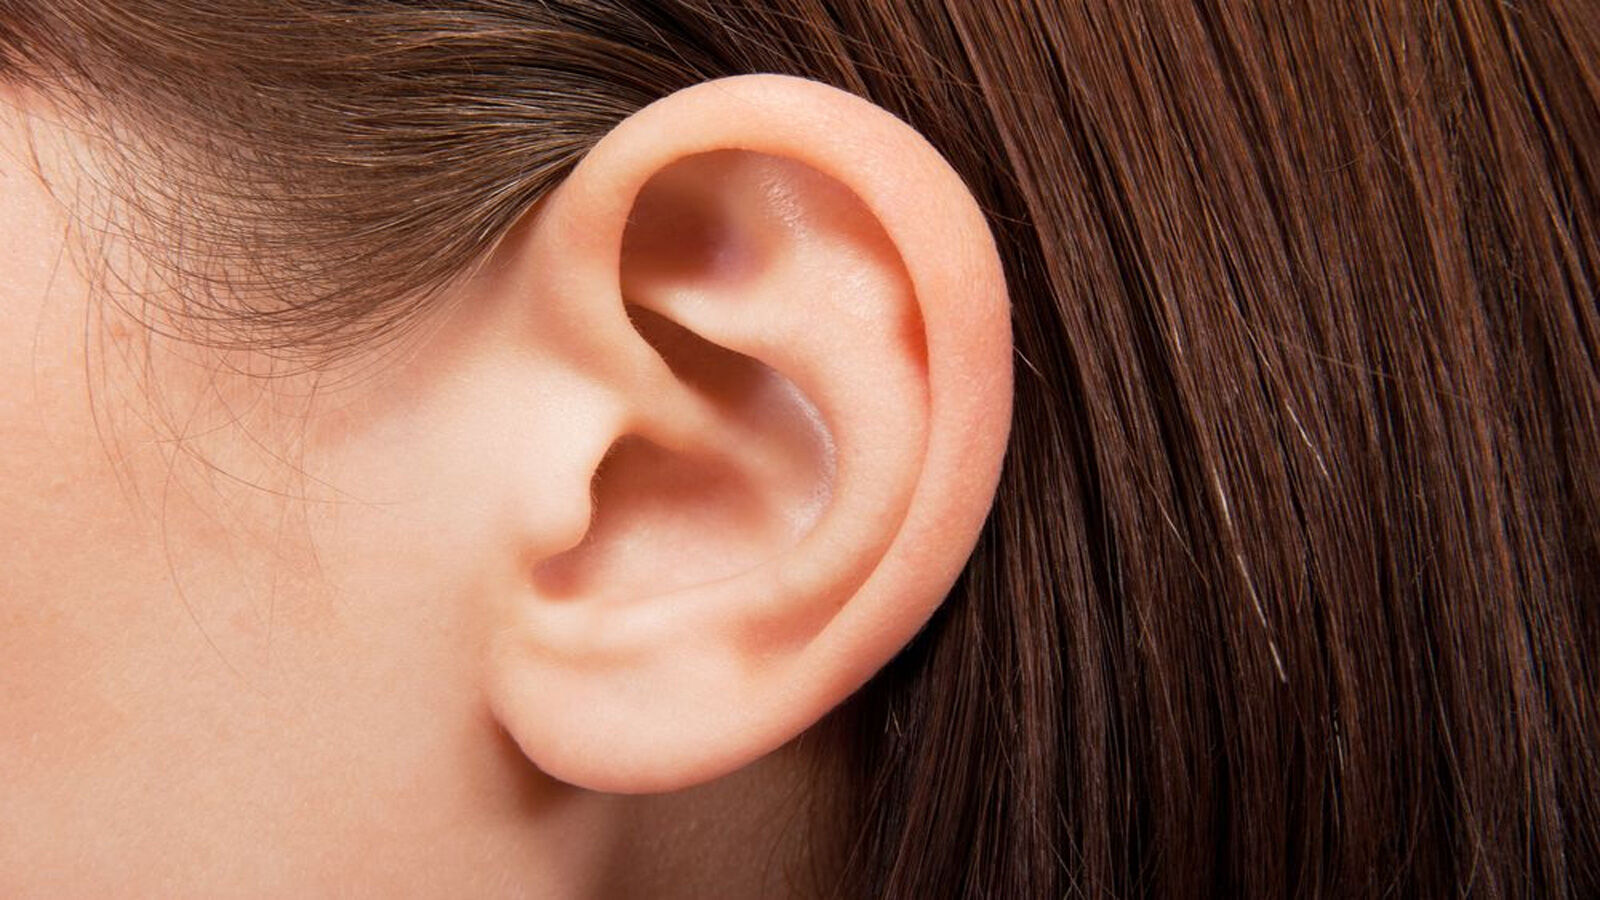 Ciprofloxacin ear drops caused precipitate in ear canal in Otitis